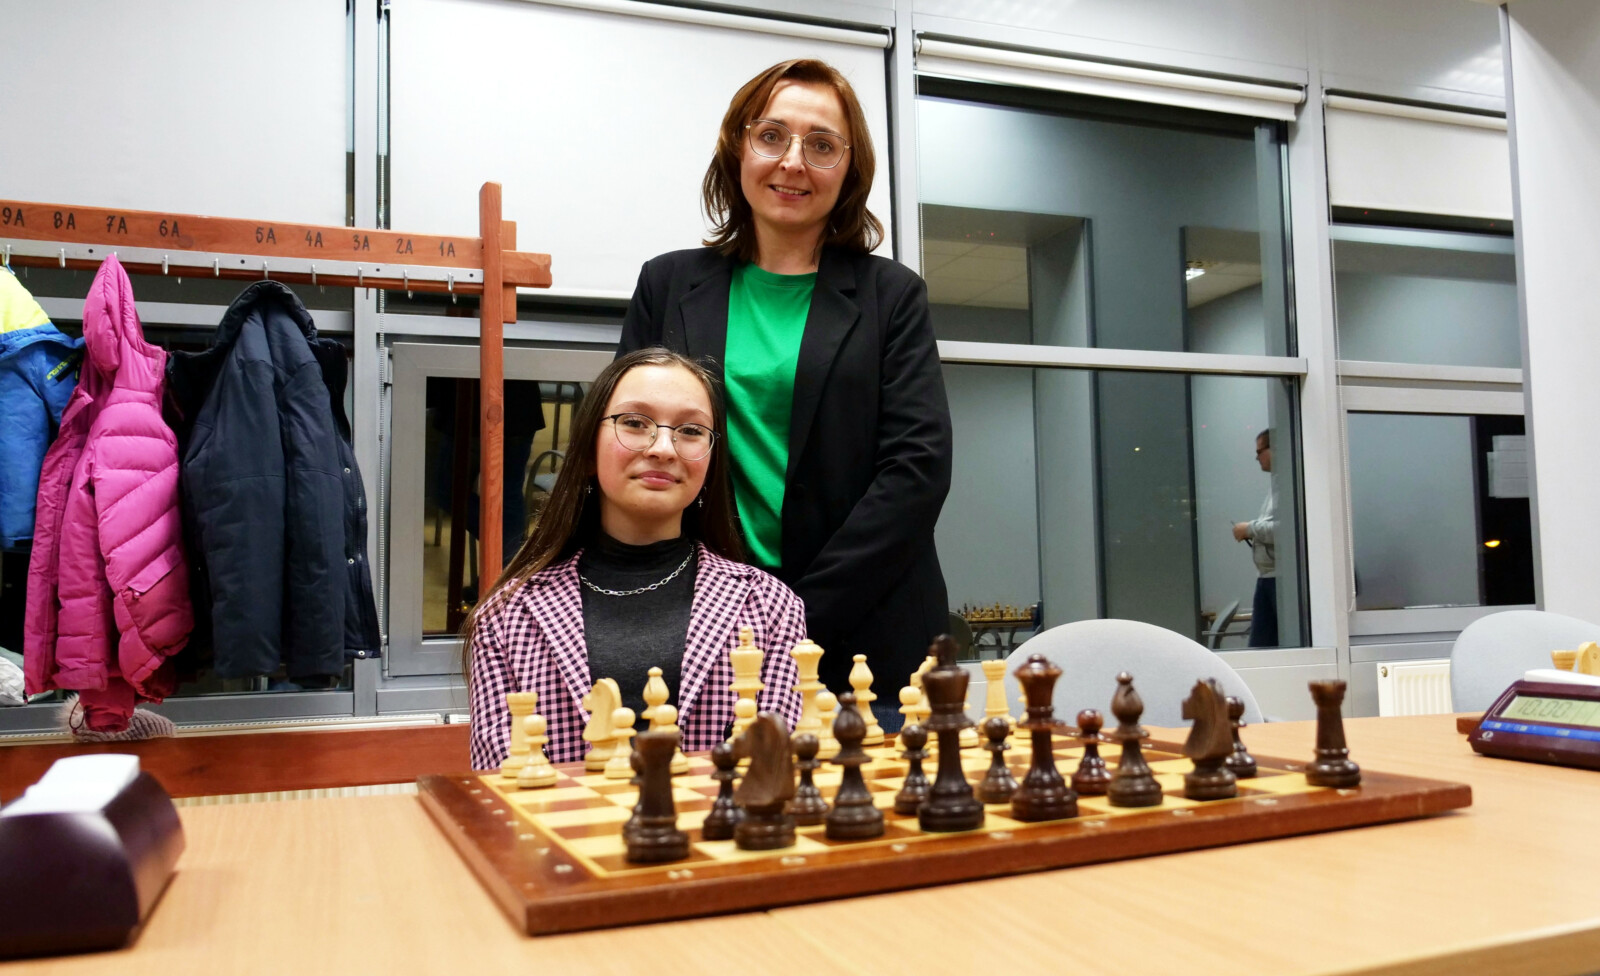 Zefir Boguszowice: 32 lata historii gry w szachy